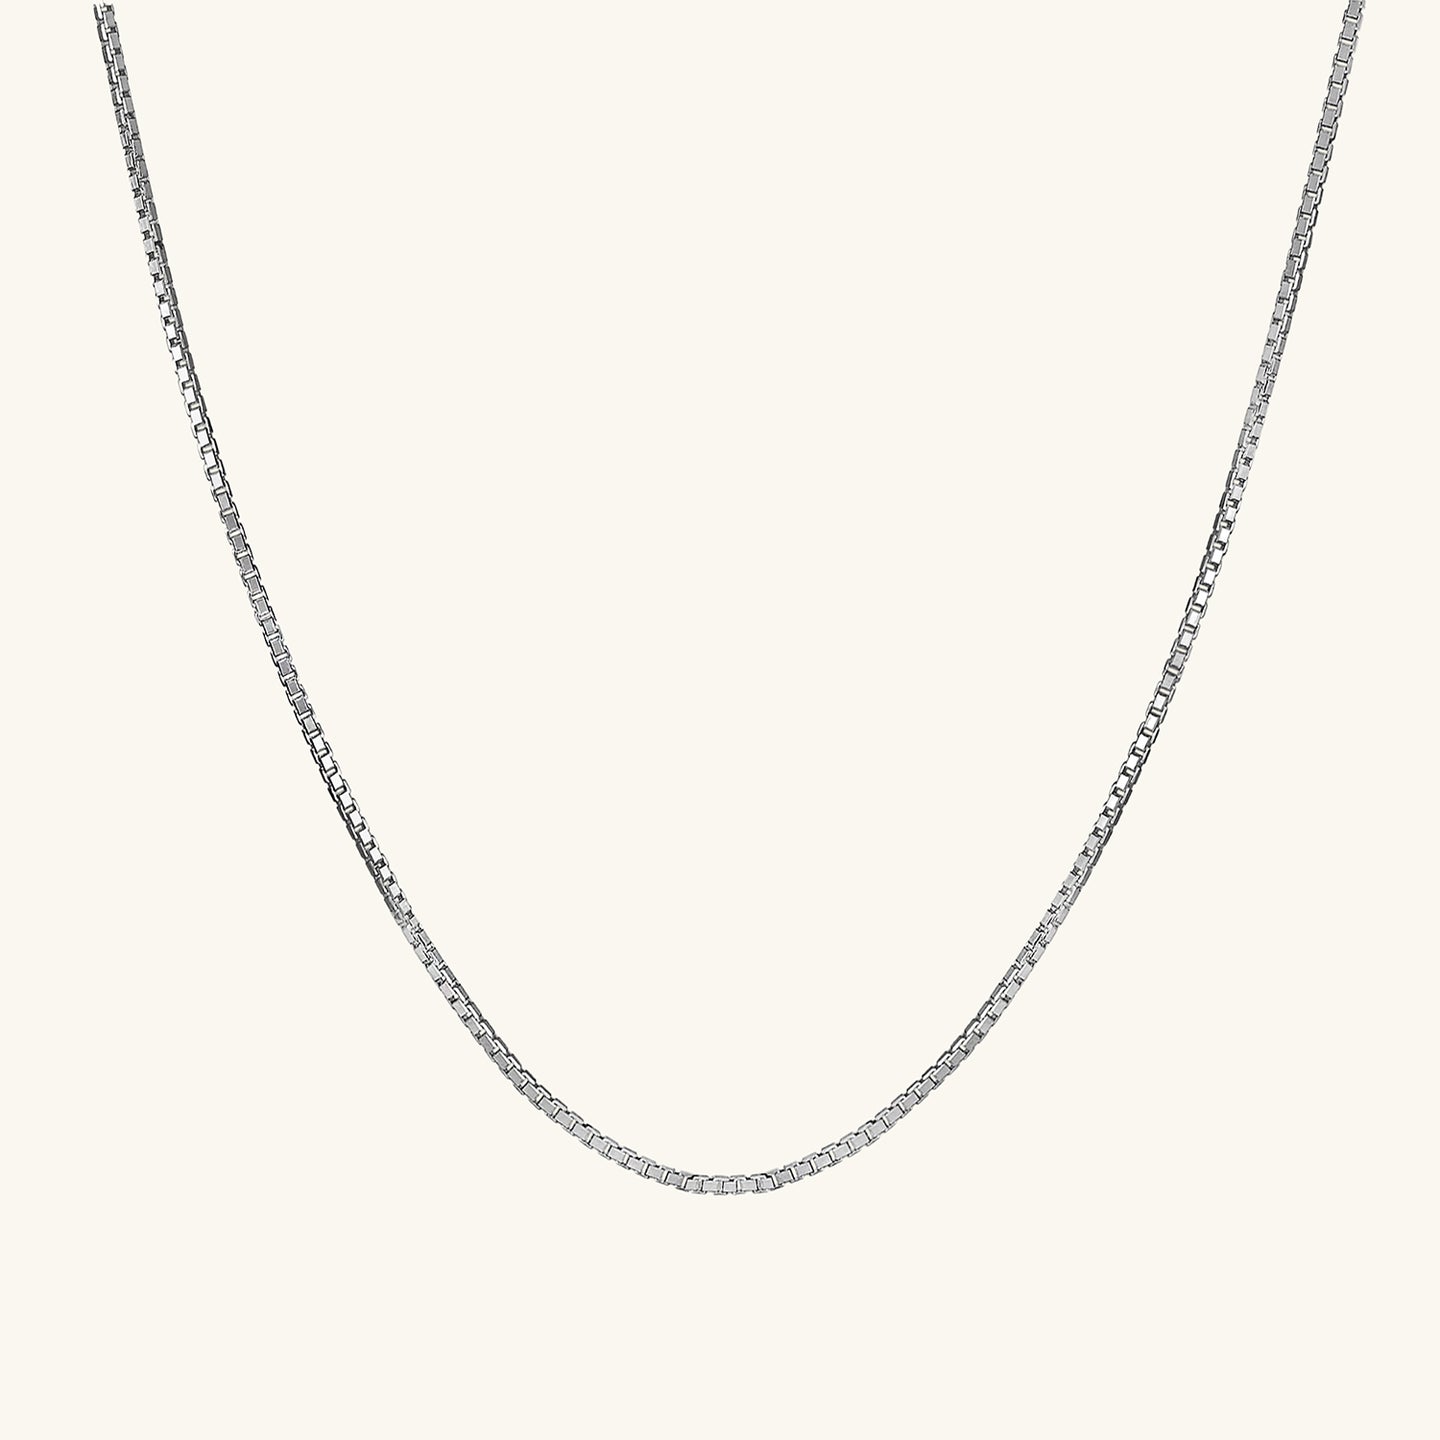 HYMI's Silver Box Chain Choker Necklace: Timeless Elegance